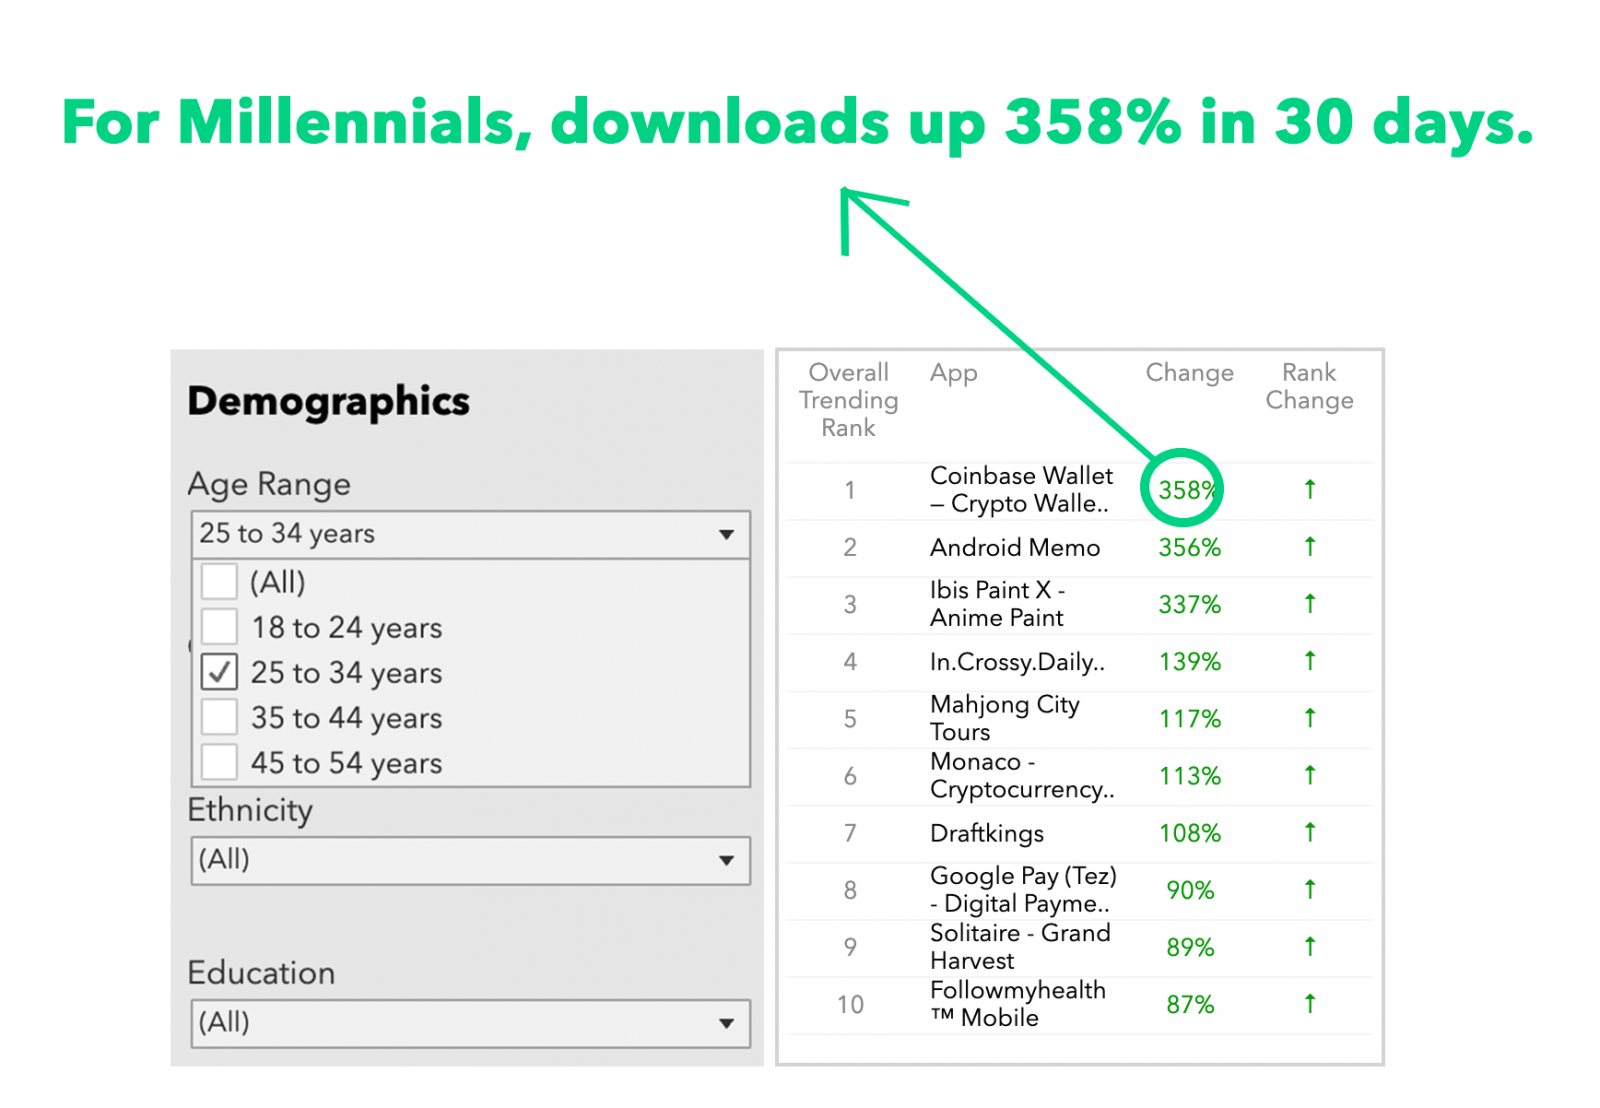 For Millennials, downloads up 358% in 30 days.